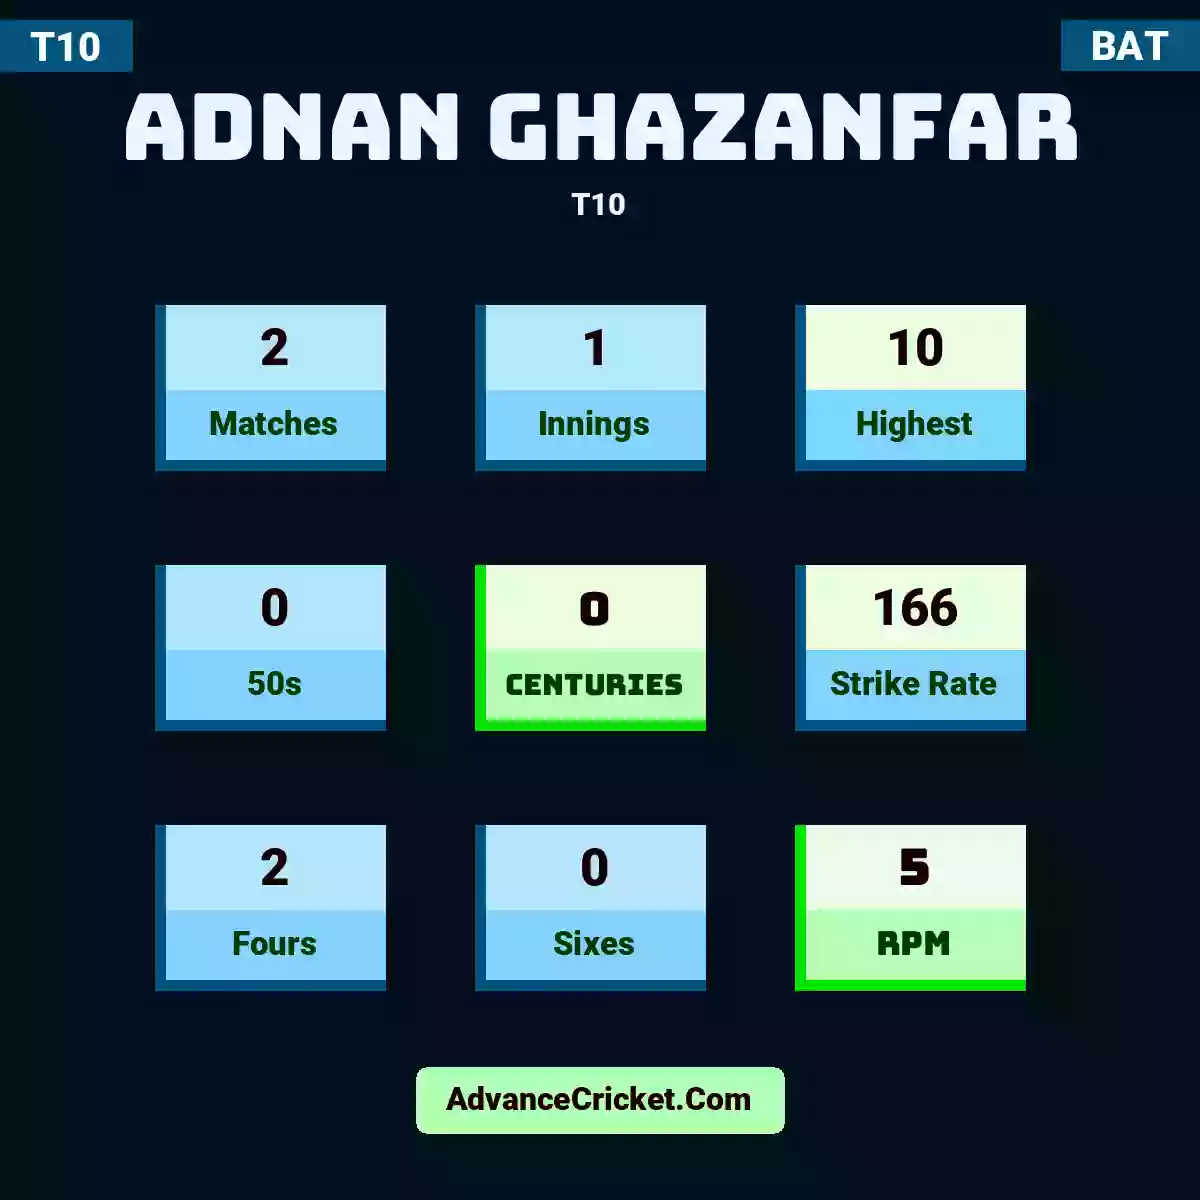 Adnan Ghazanfar T10 , Adnan Ghazanfar played 2 matches, scored 10 runs as highest, 0 half-centuries, and 0 centuries, with a strike rate of 166. A.Ghazanfar hit 2 fours and 0 sixes, with an RPM of 5.